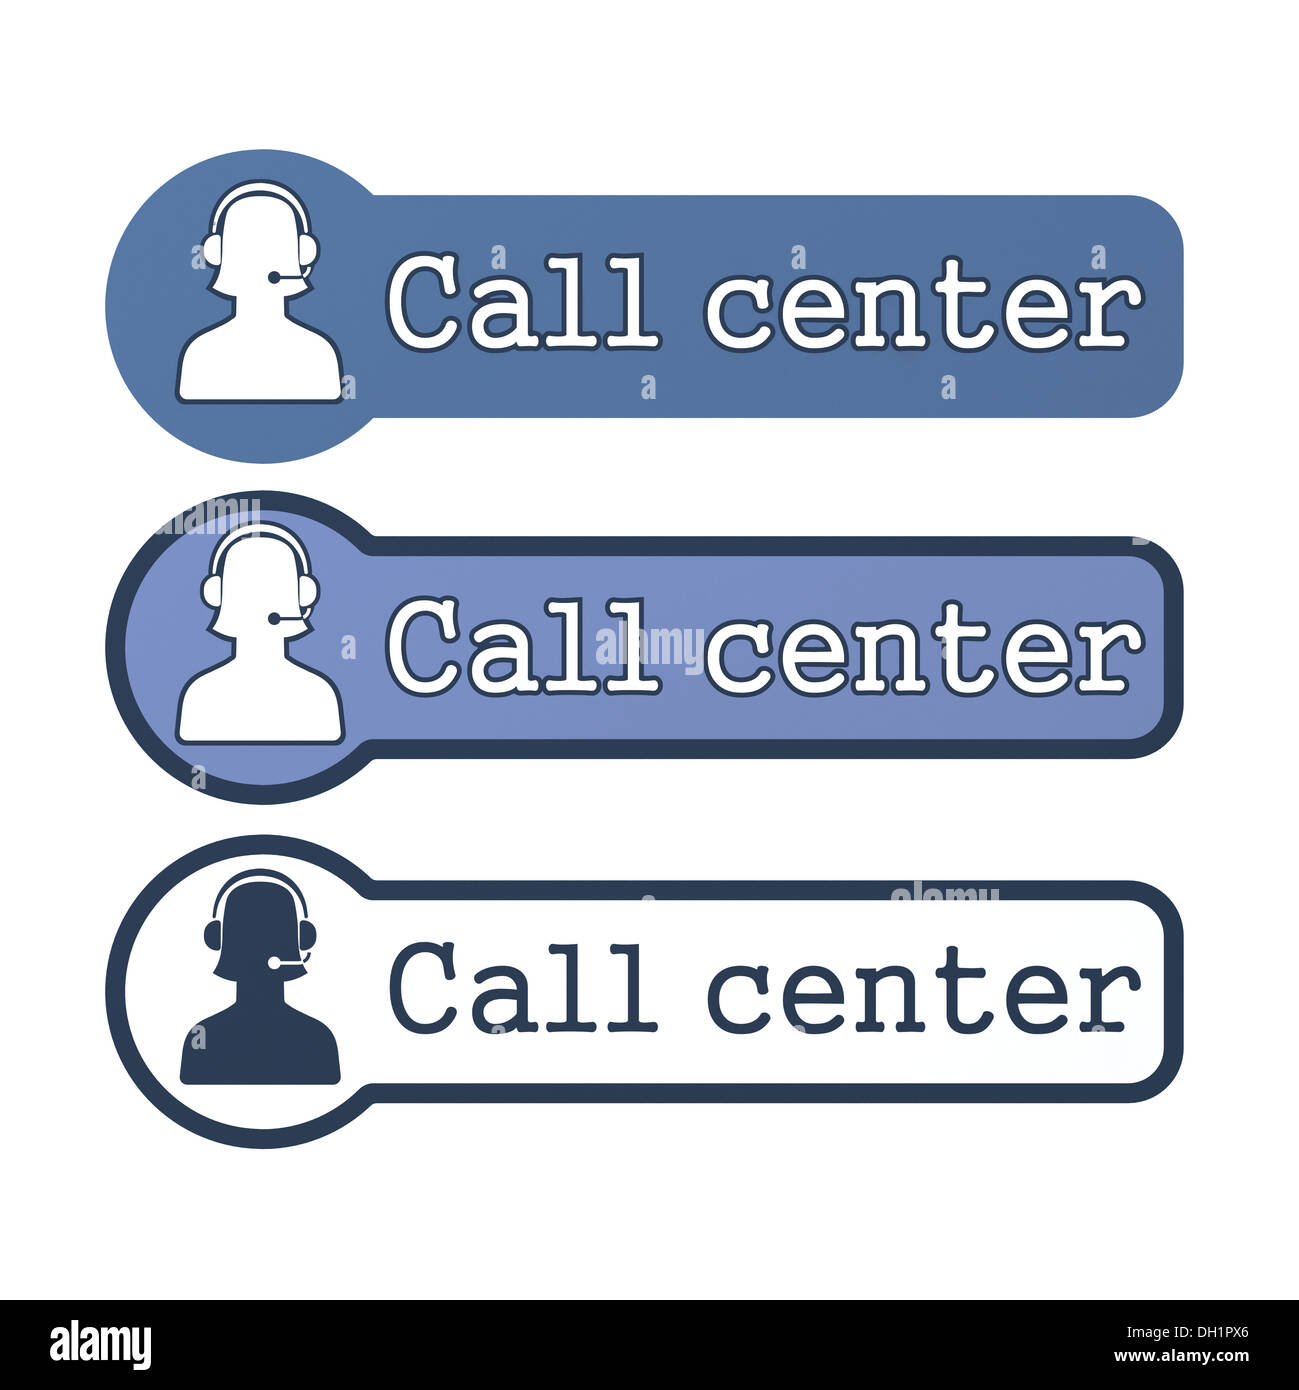 Website Element: 'Call Center' Stock Photo